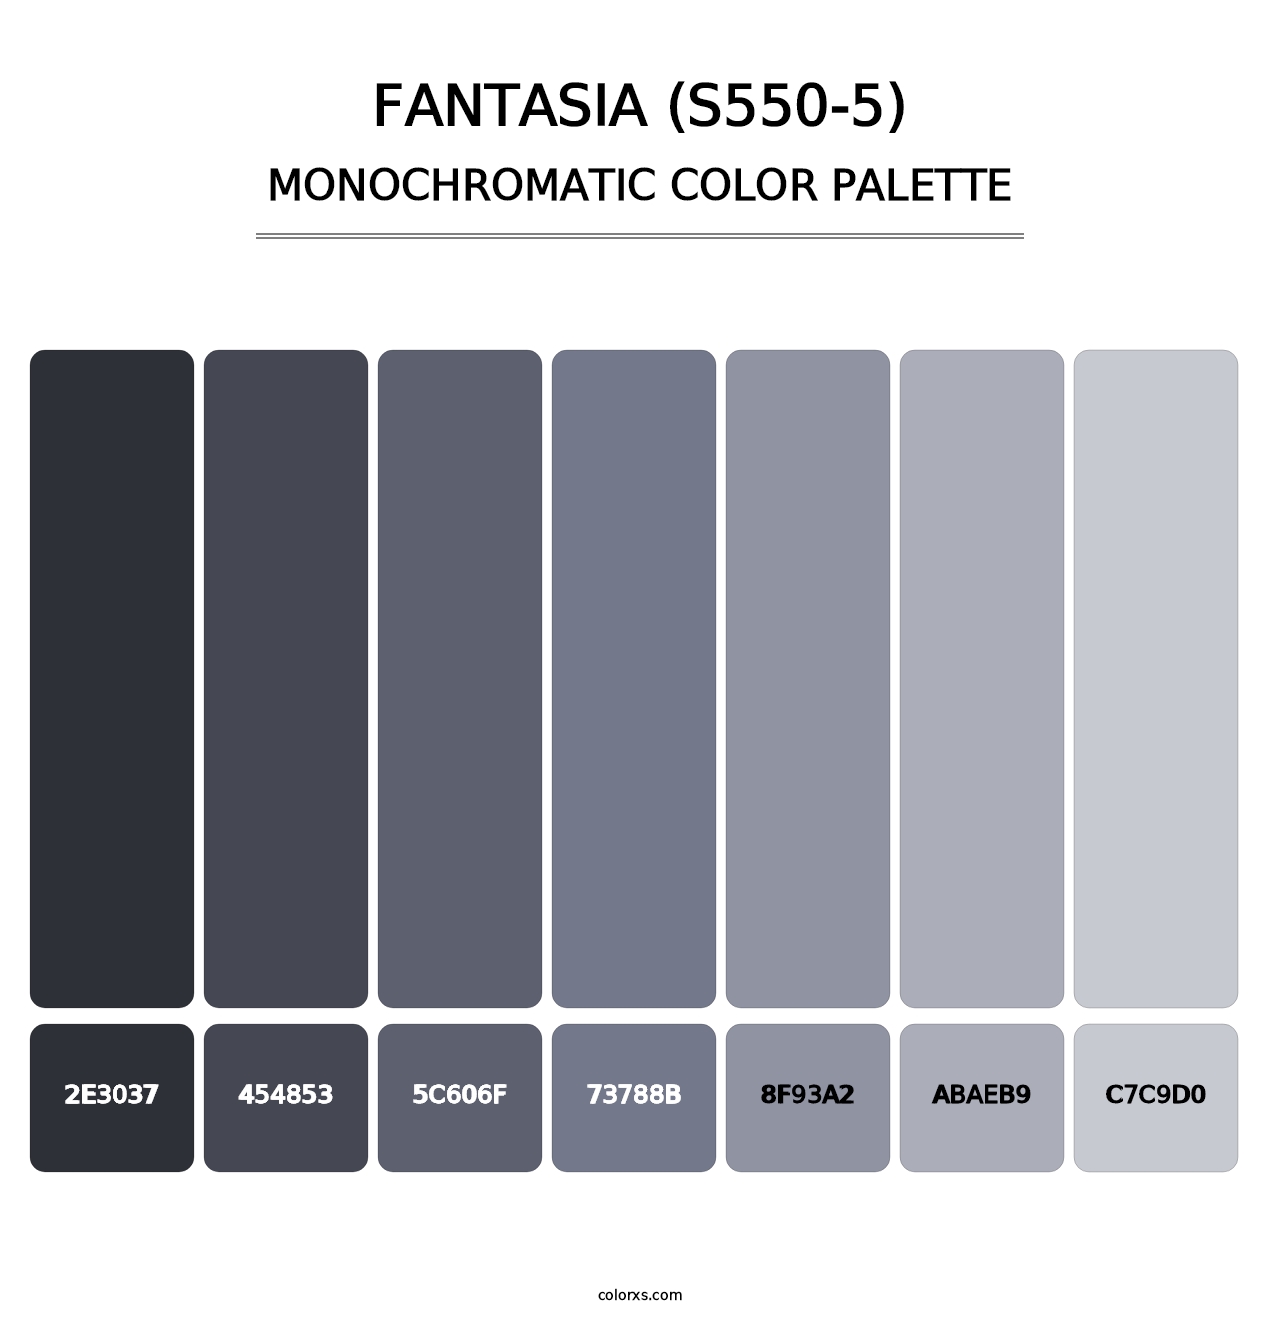 Fantasia (S550-5) - Monochromatic Color Palette